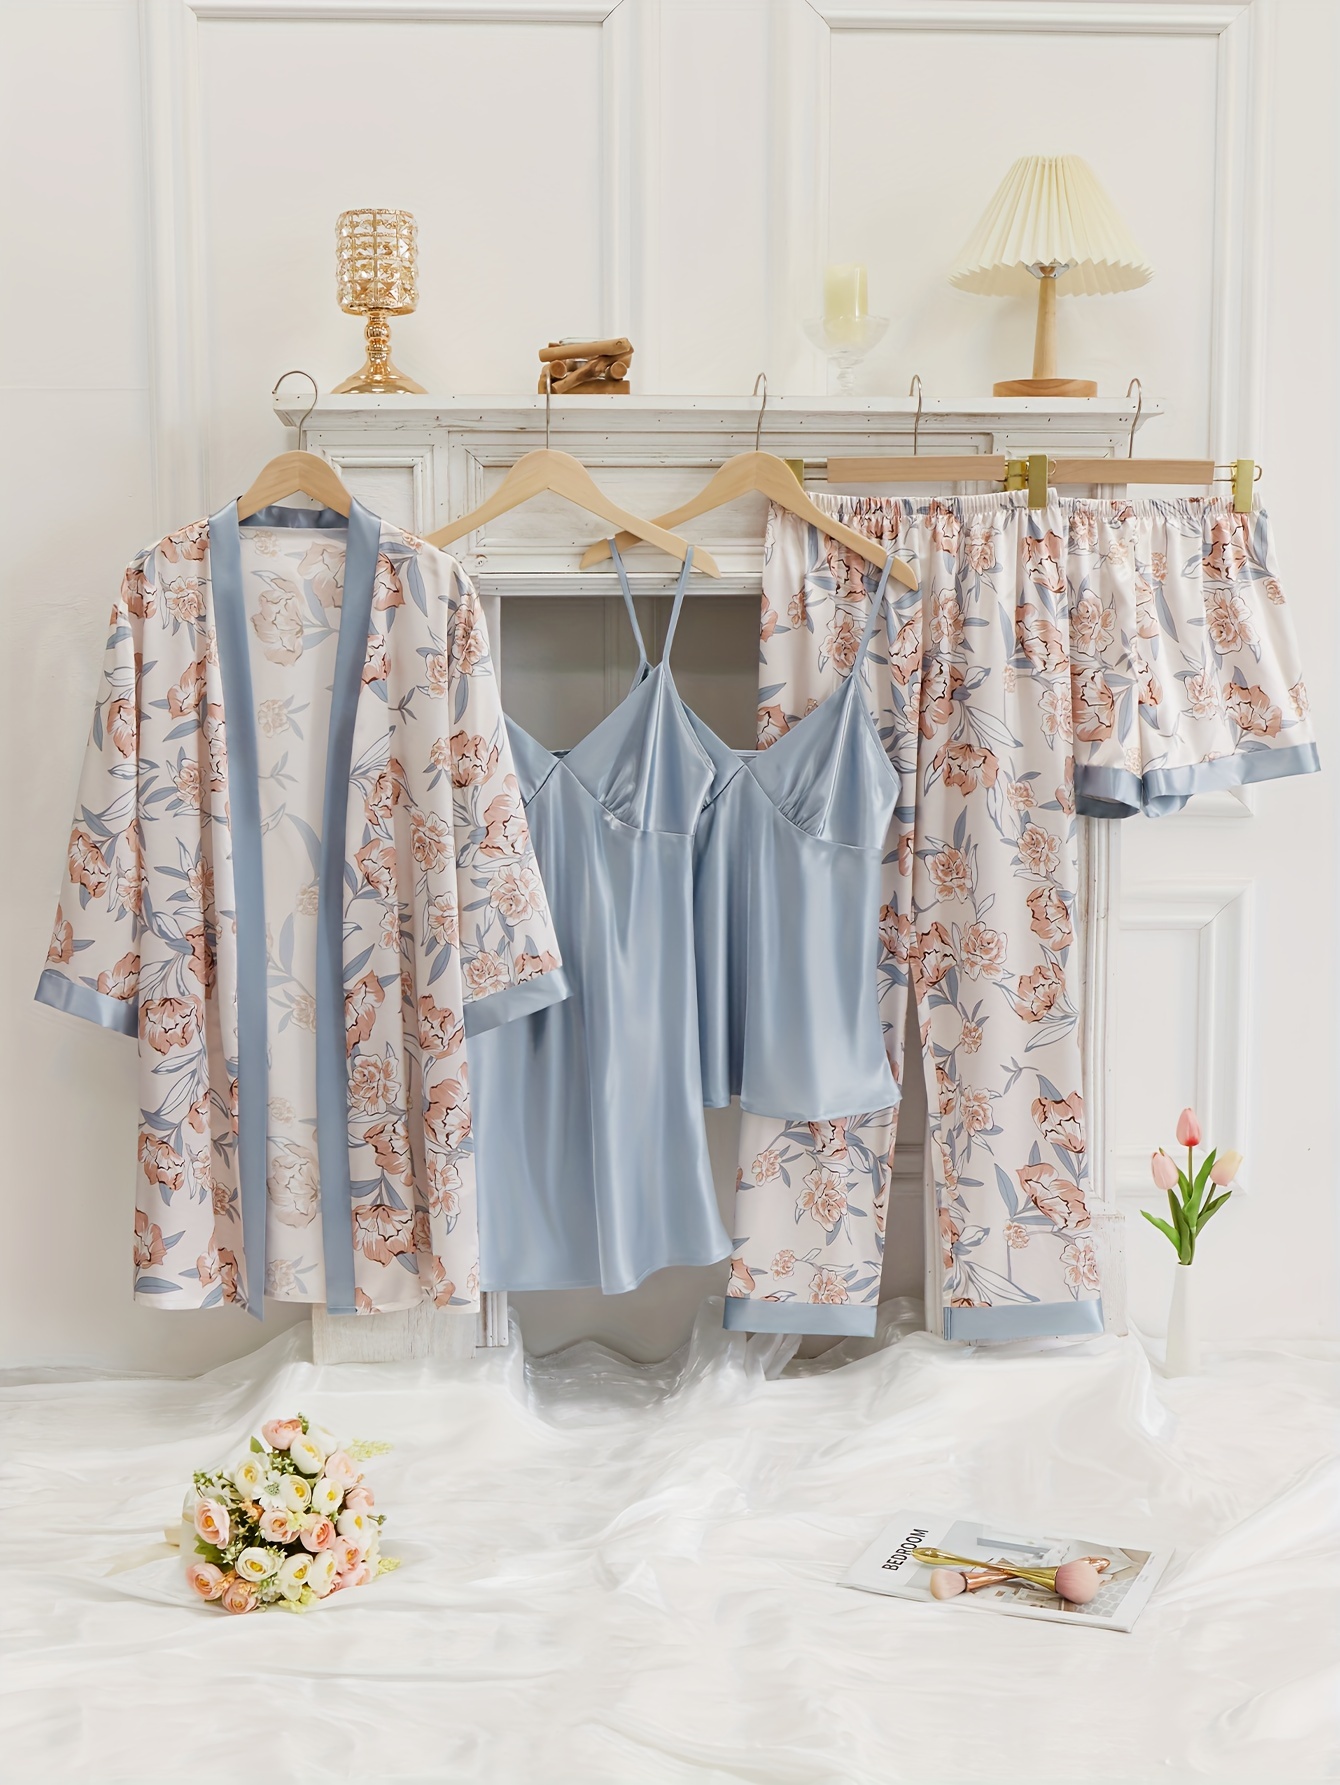 Summer Pajamas for Women - Stylish Print Ladies Pajama Set, Oversized – La  Fiore